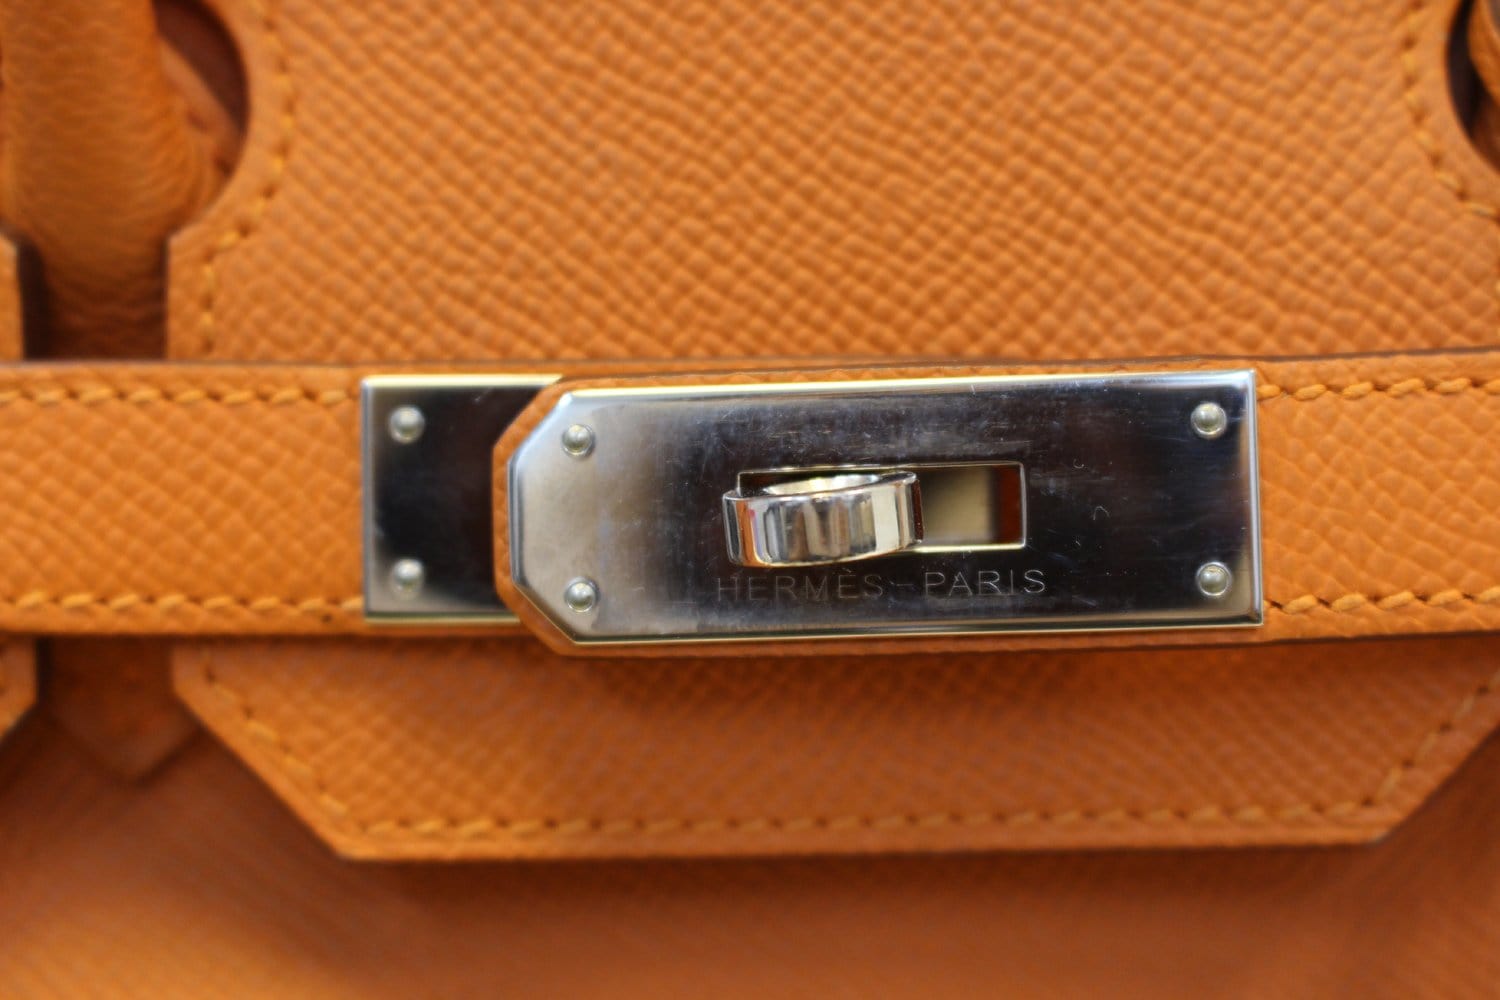 Hermes Birkin 30 Orange Clemence Gold Hardware – Madison Avenue